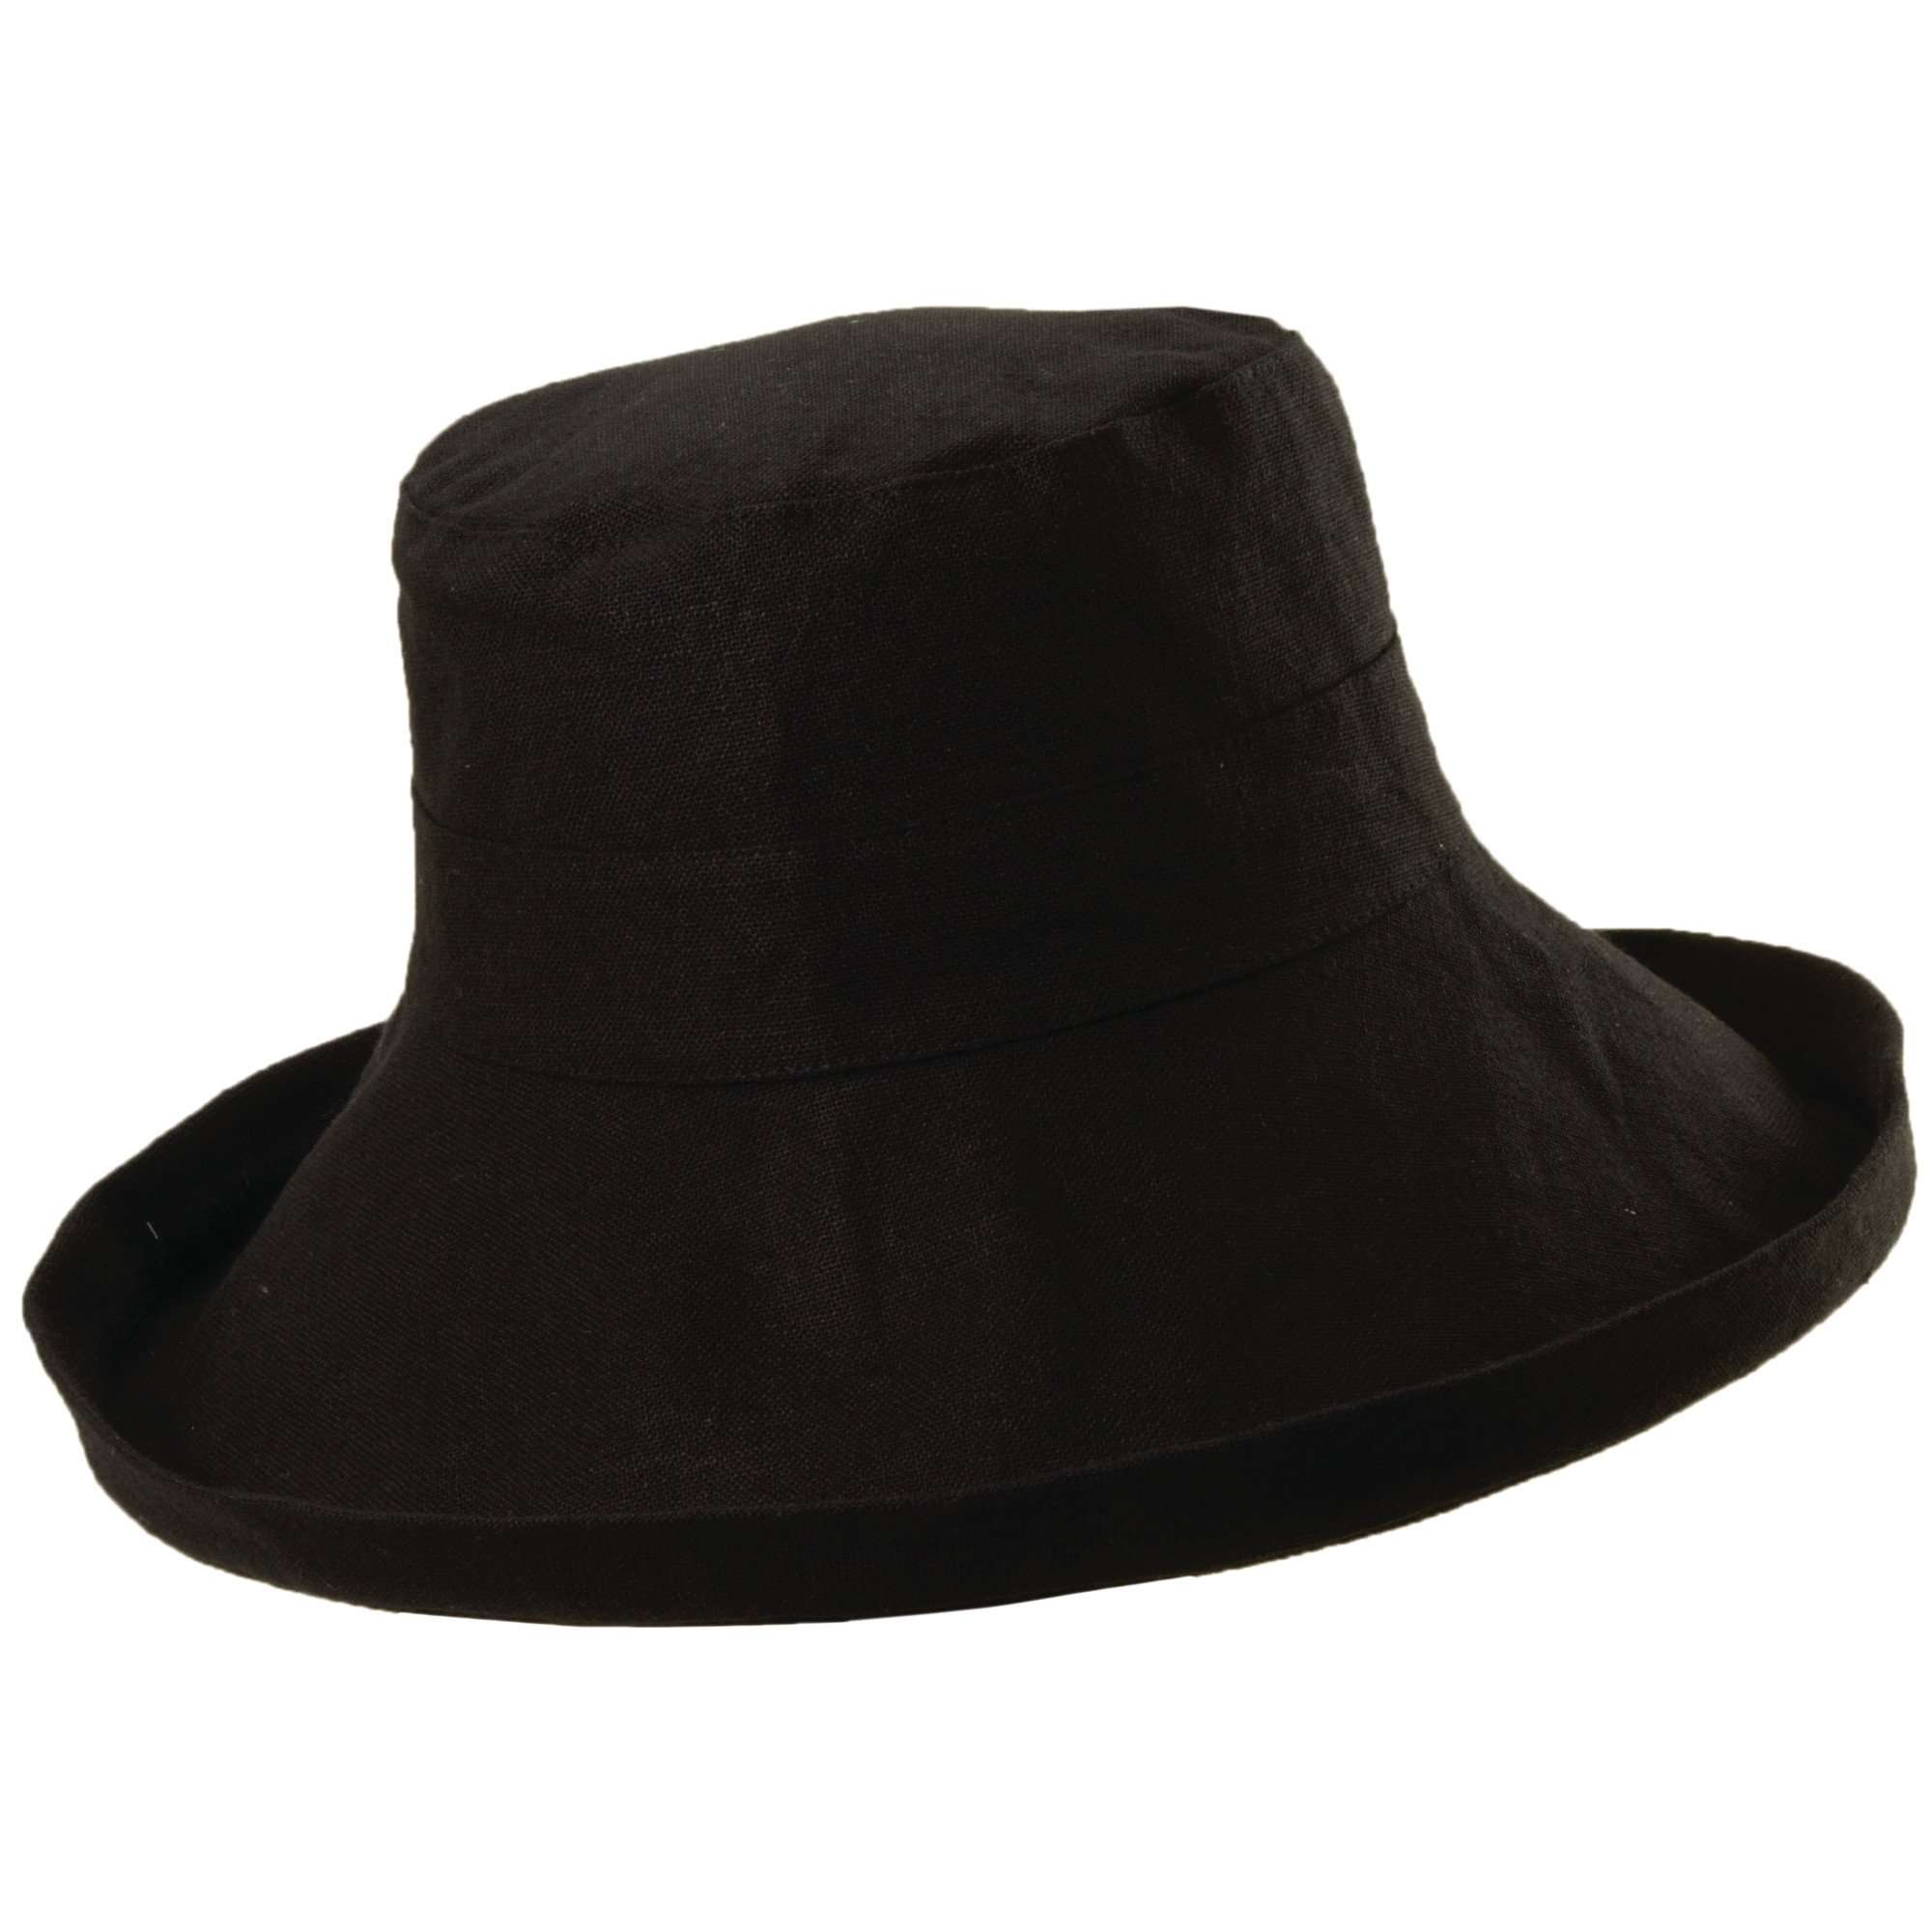 Up Turned Brim Linen Sun Hat in Neutral Colors - Tropical Trends Kettle Brim Hat Dorfman Hat Co. lc635BK Black  